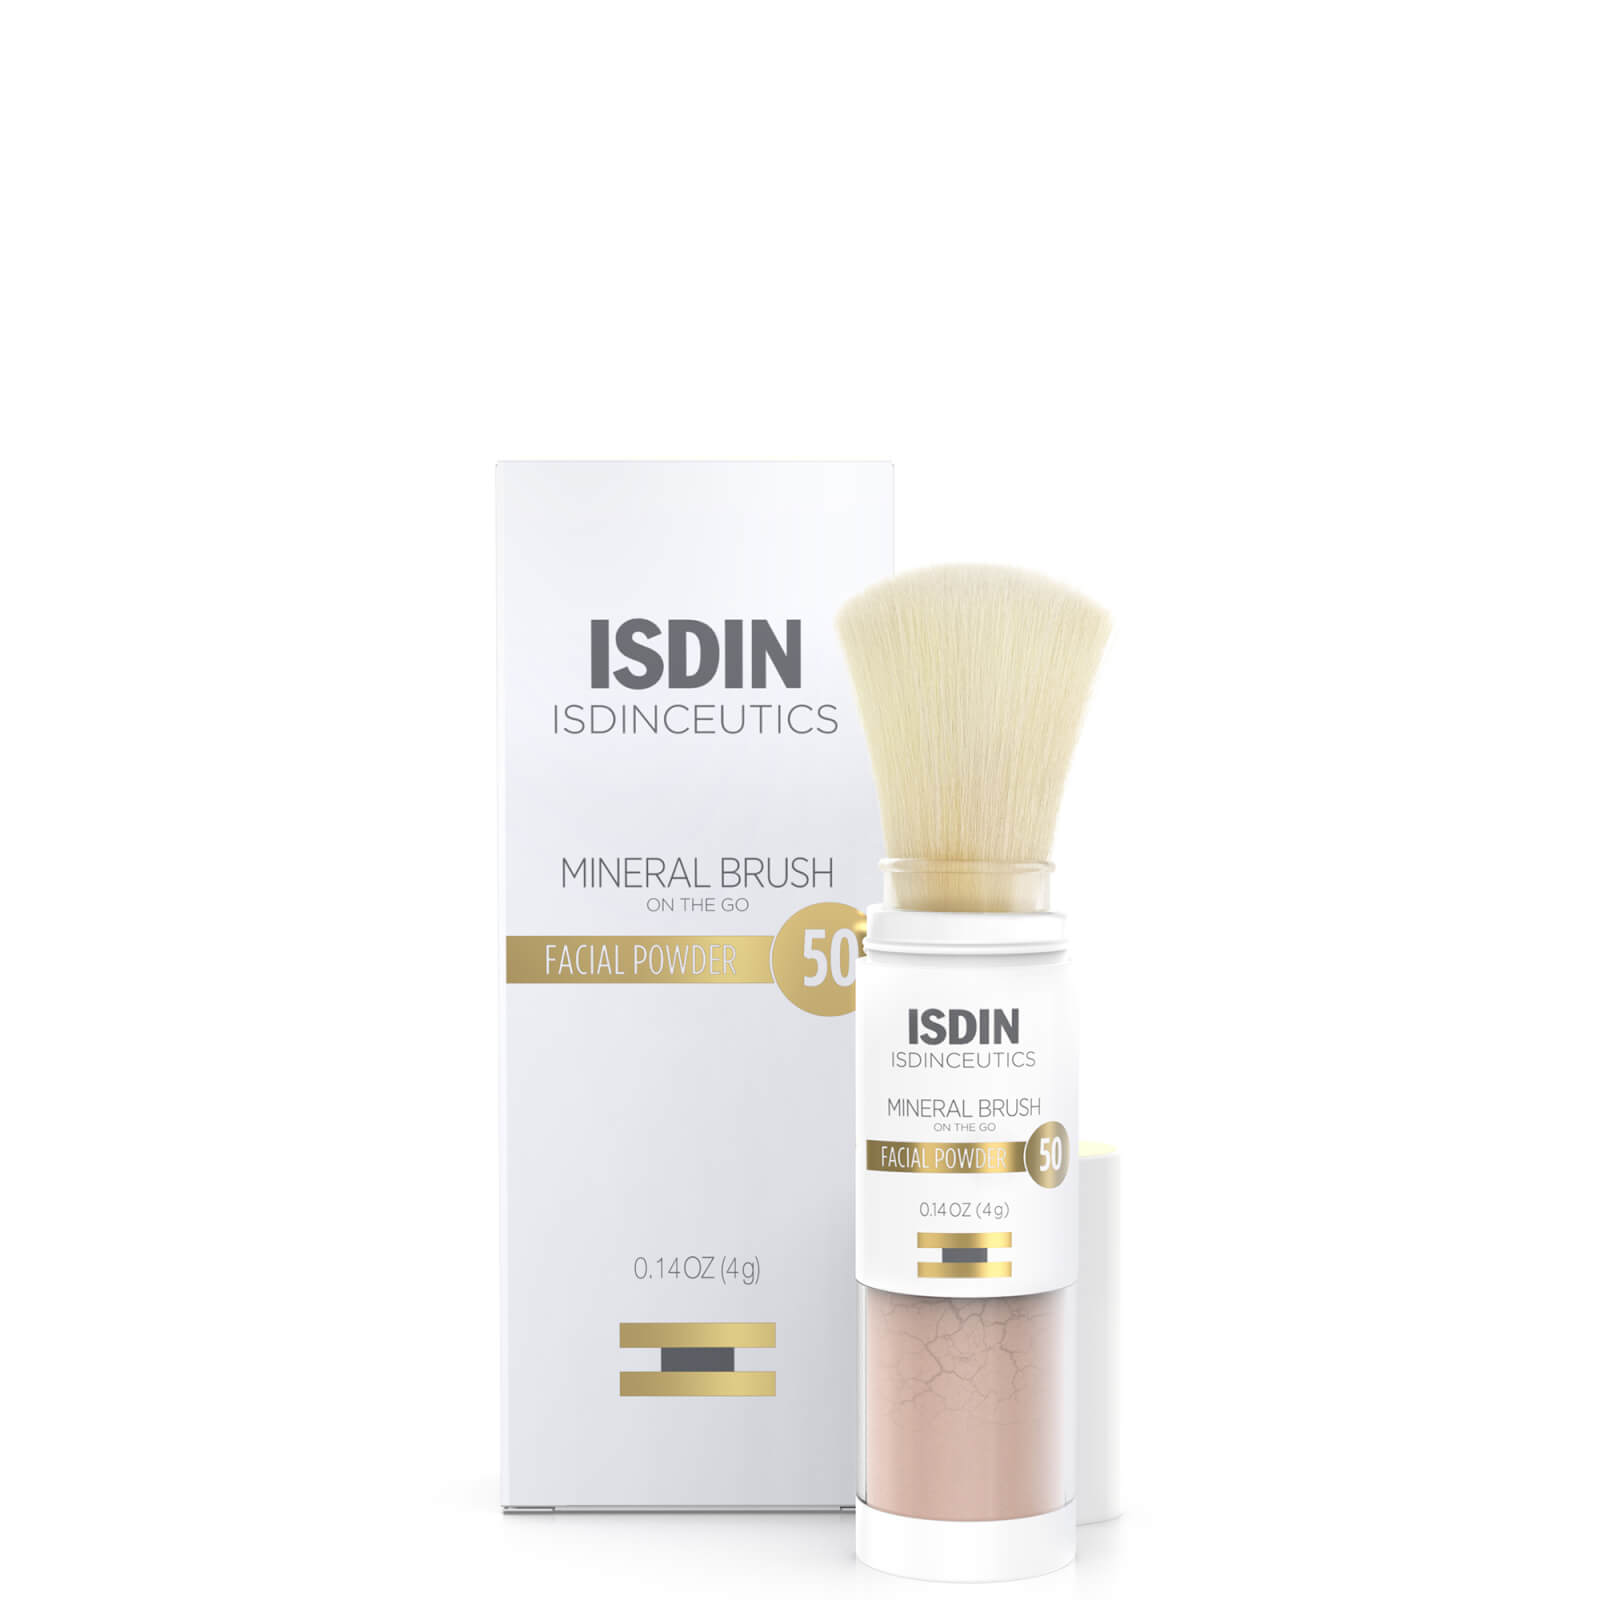 Isdin Ceutics Mineral Brush 100% Mineral Powder Matte Finish With Zinc Oxide 0.14 oz